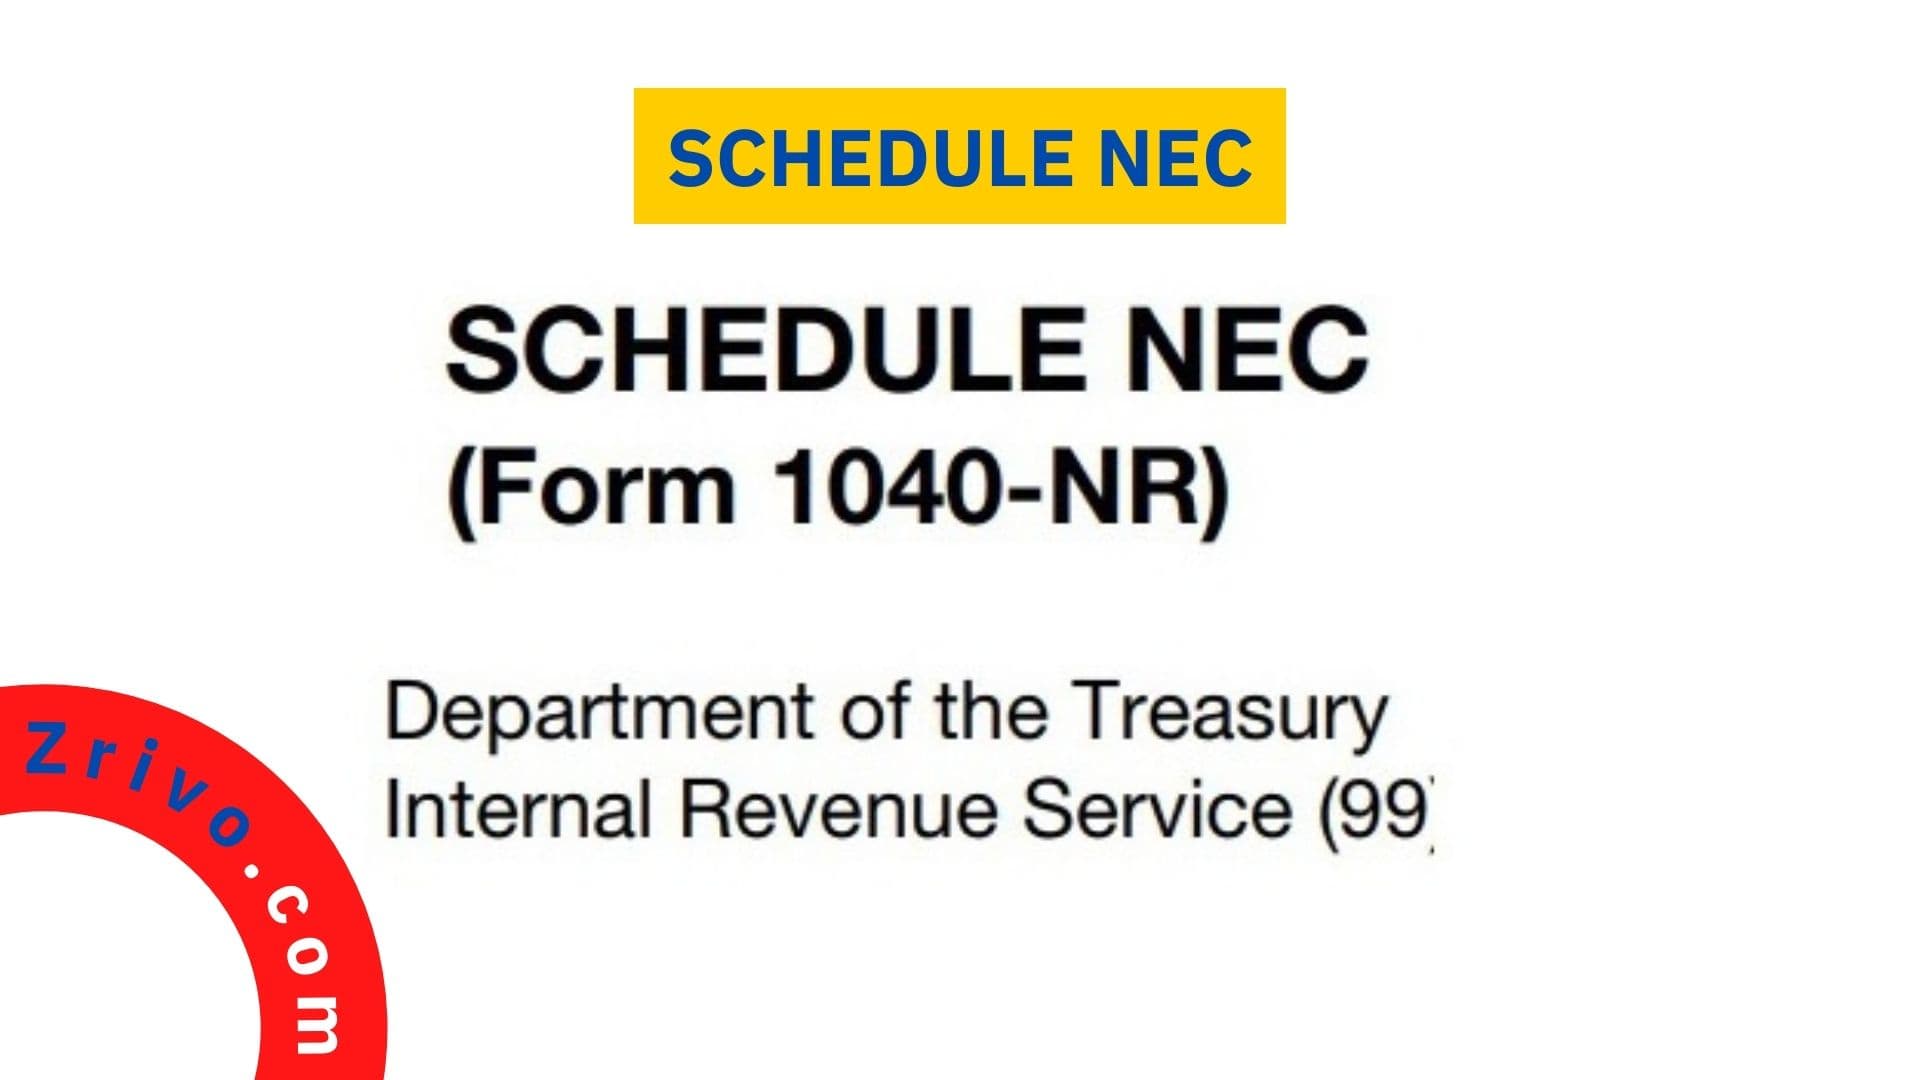 Schedule NEC